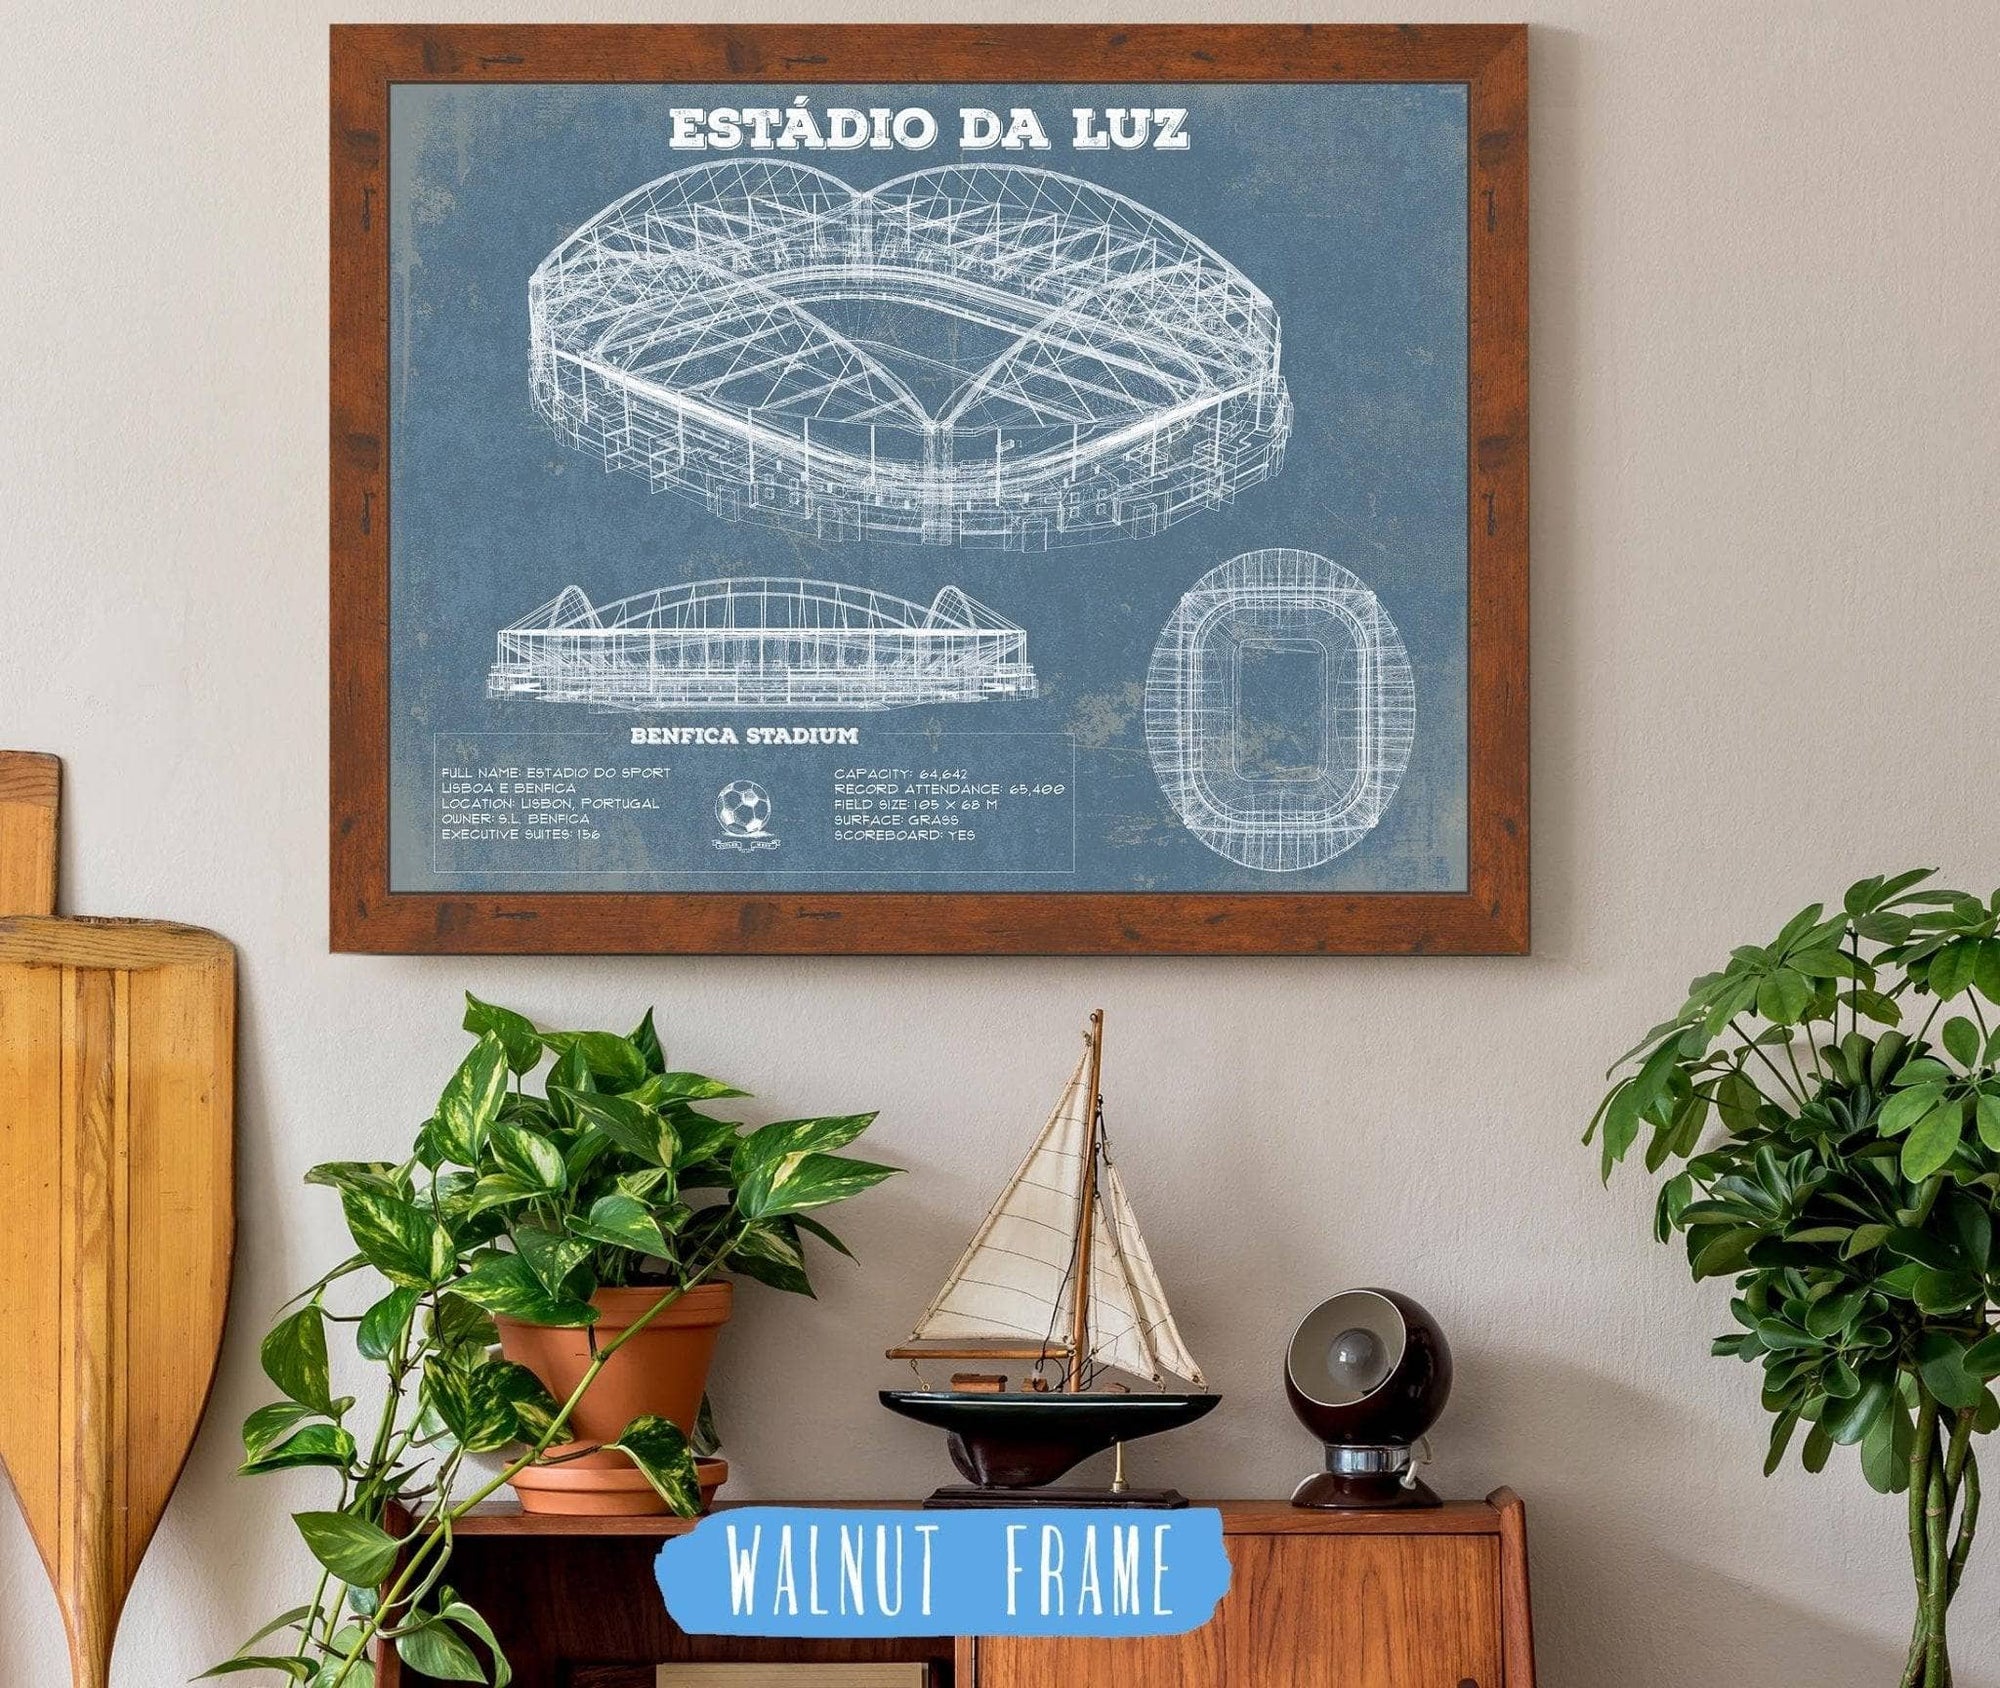 Cutler West Soccer Collection 14" x 11" / Walnut Frame Estudio da Luz (Benfica Stadium) - Portugal National Football Team Blueprint Vintage Soccer Print 933311007_57518